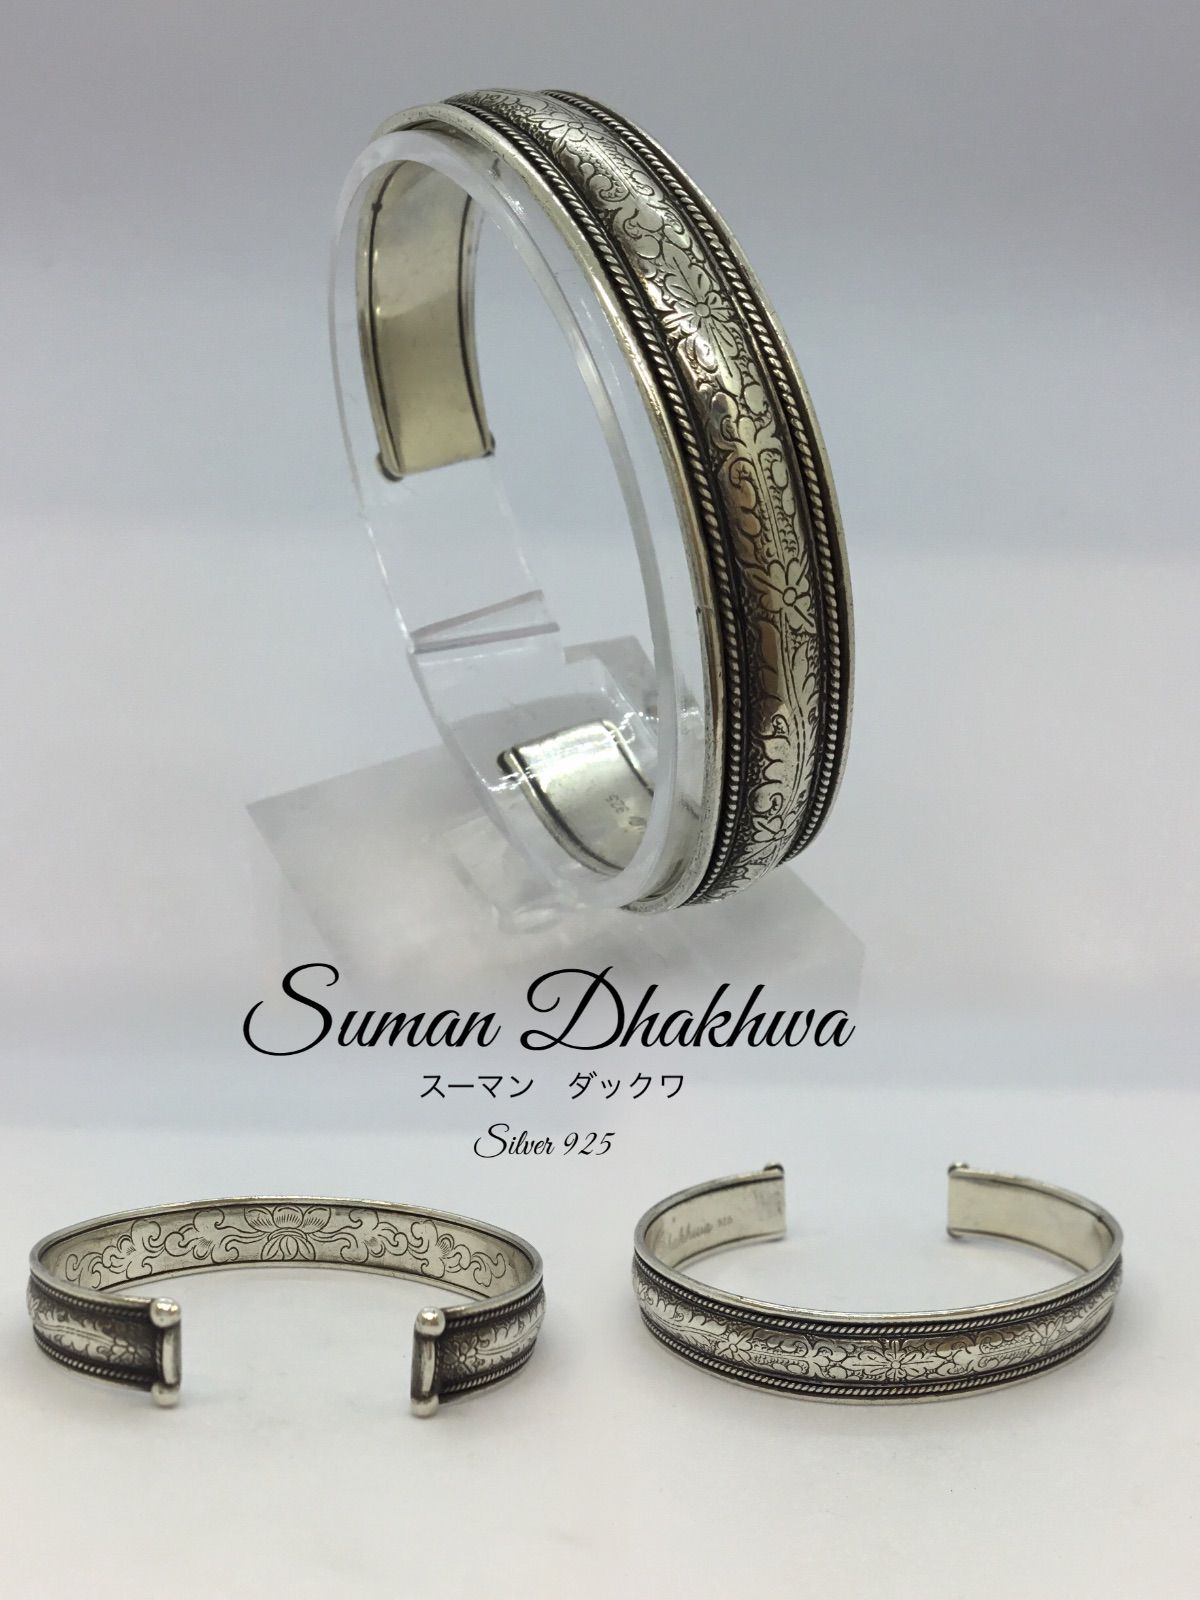 Suman Dhakhwa スーマンダックワ silver925シルバーバングル-